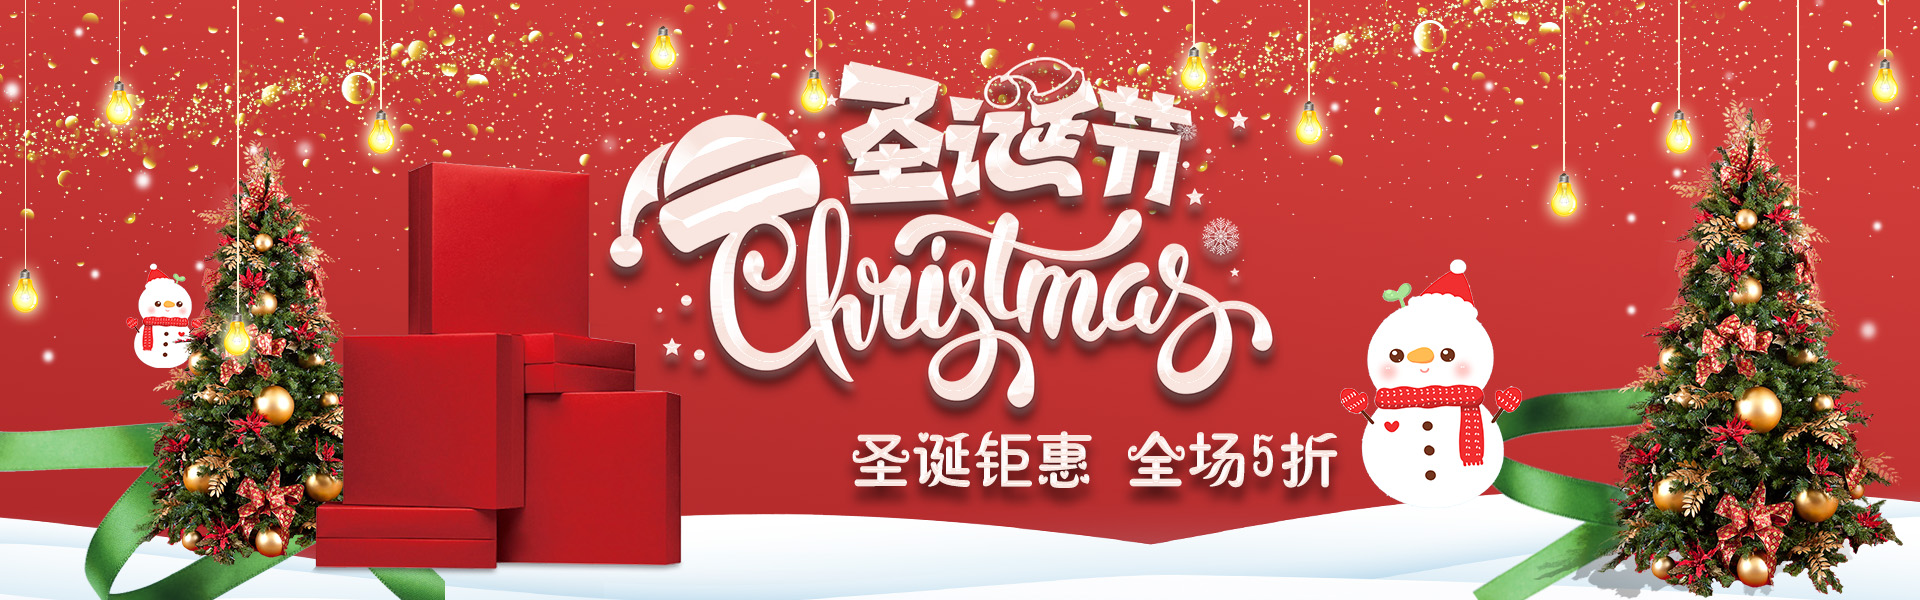 红色圣诞钜惠圣诞节淘宝banner图片